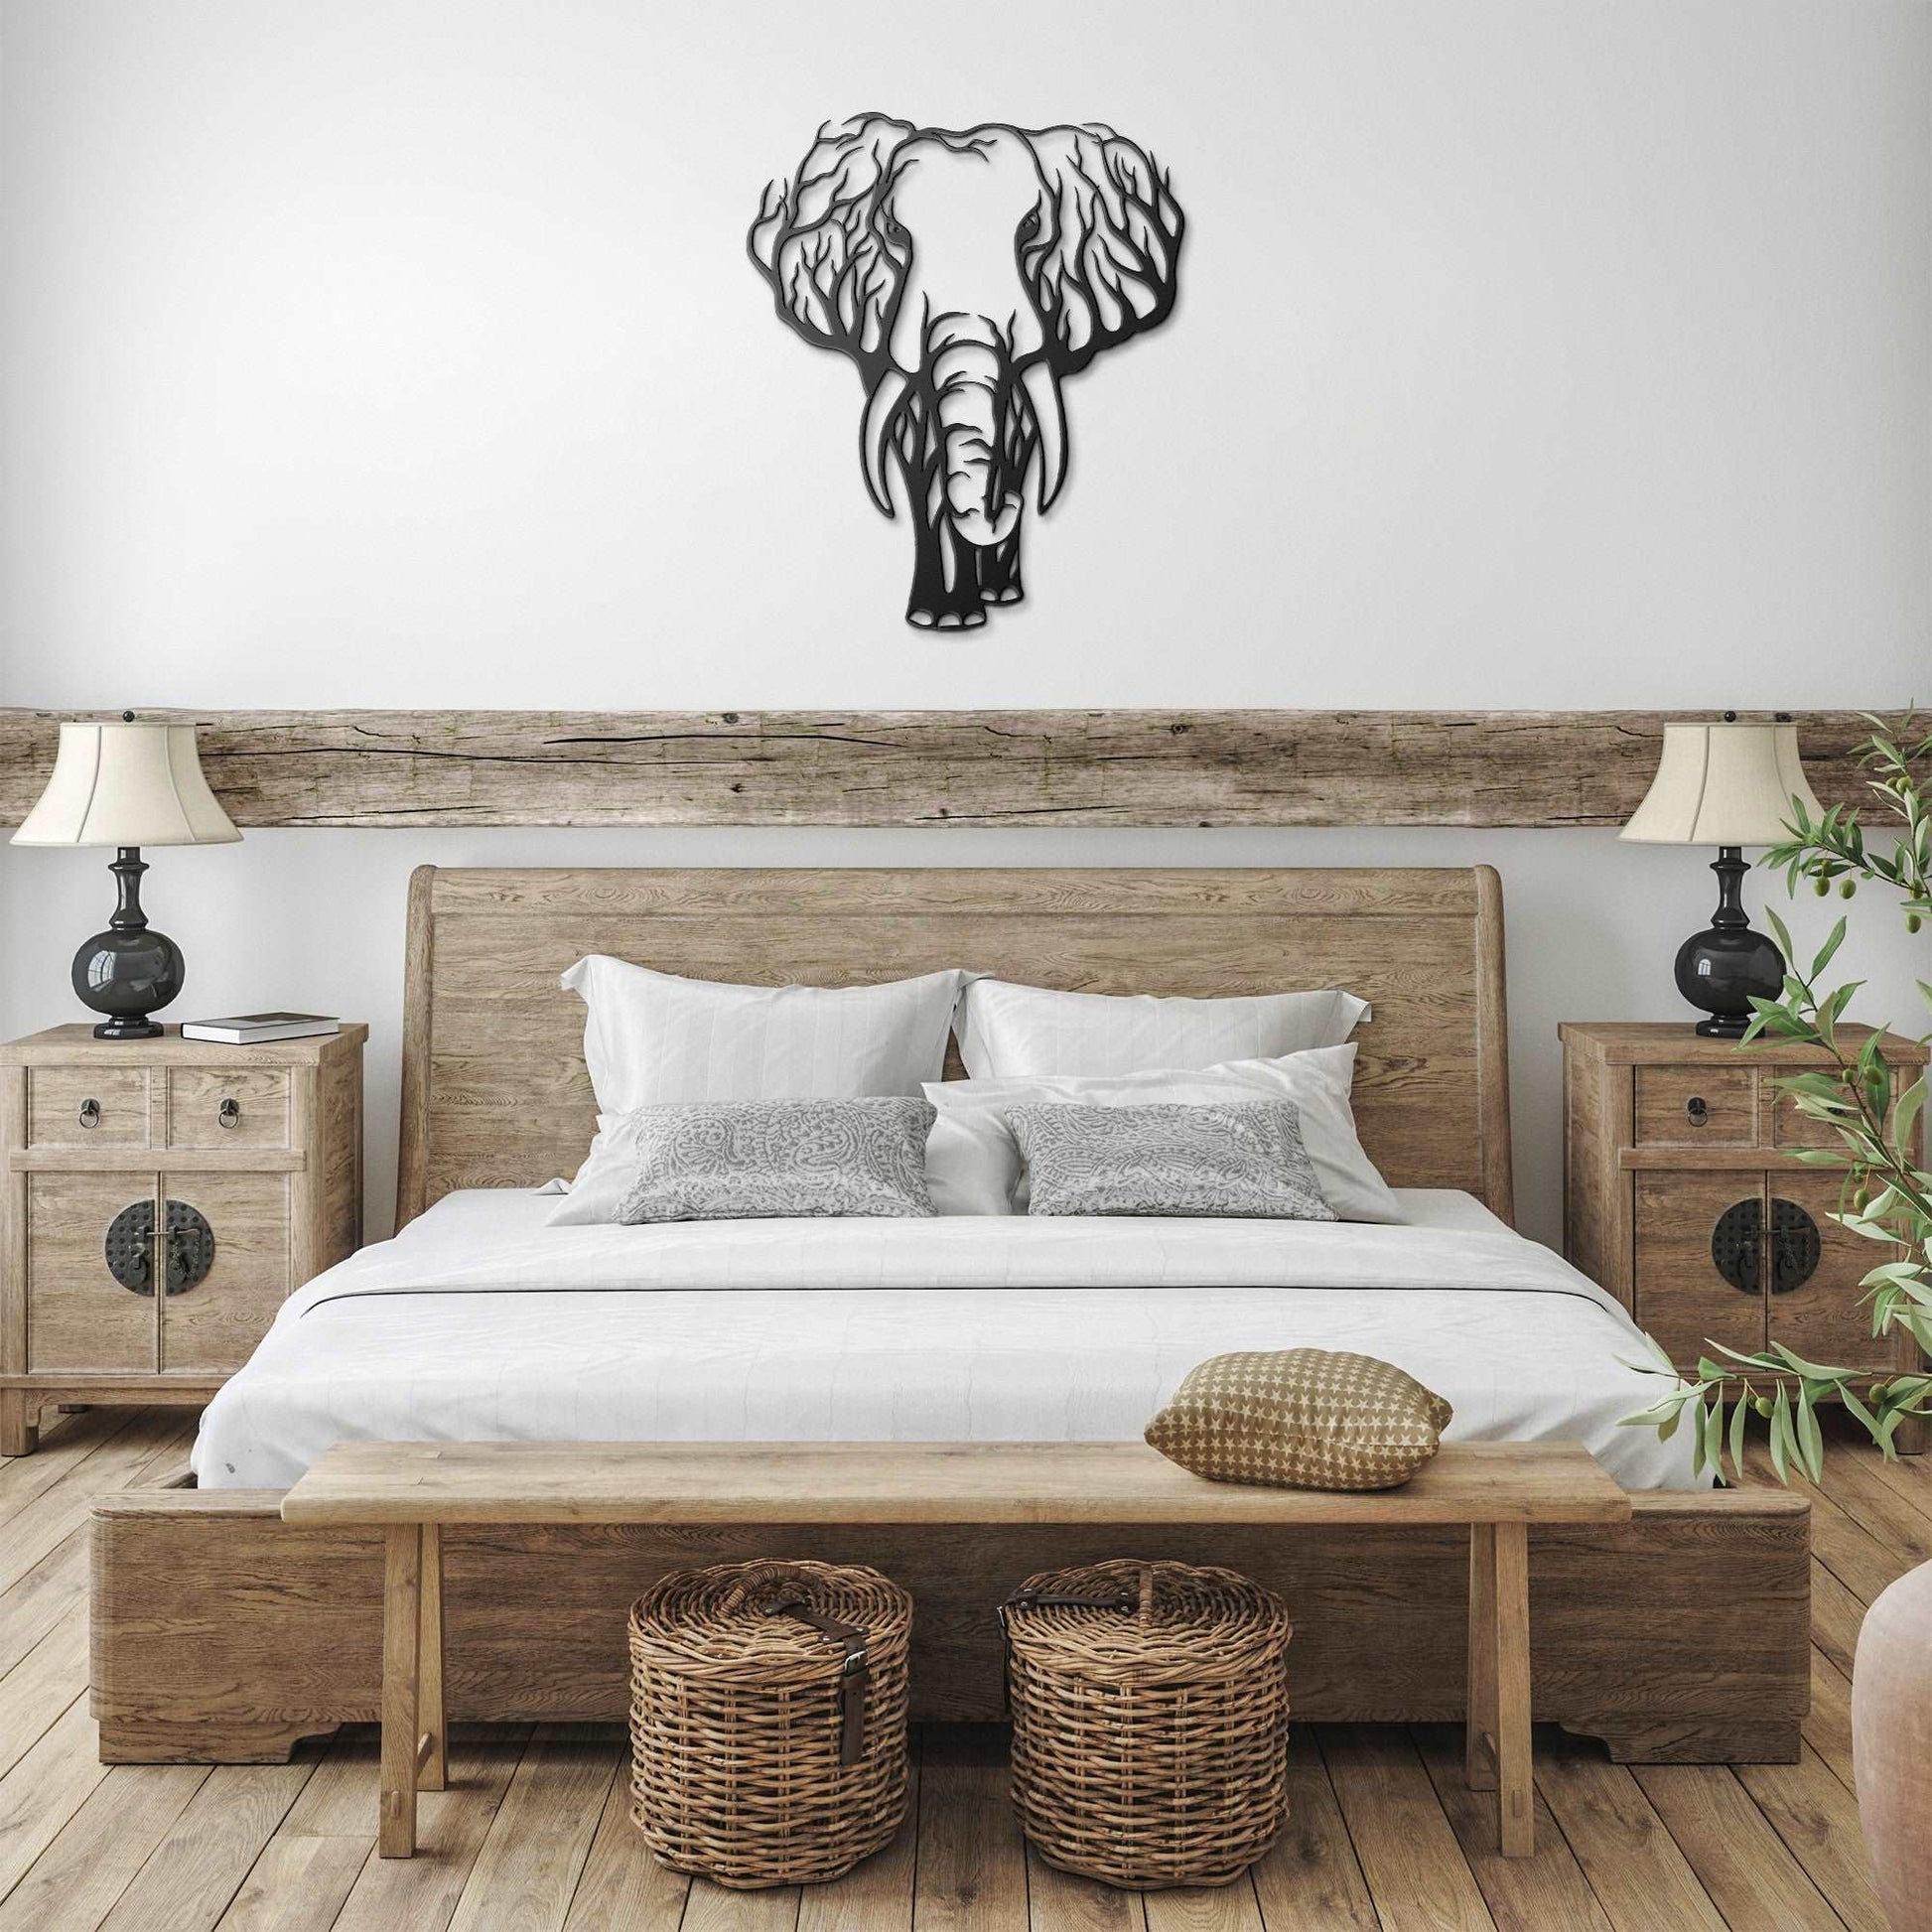 Elephant Metal Wall Art, Metal Elephant Decor, Wildlife Lover Gift, Housewarming Gift, Elephant Sign